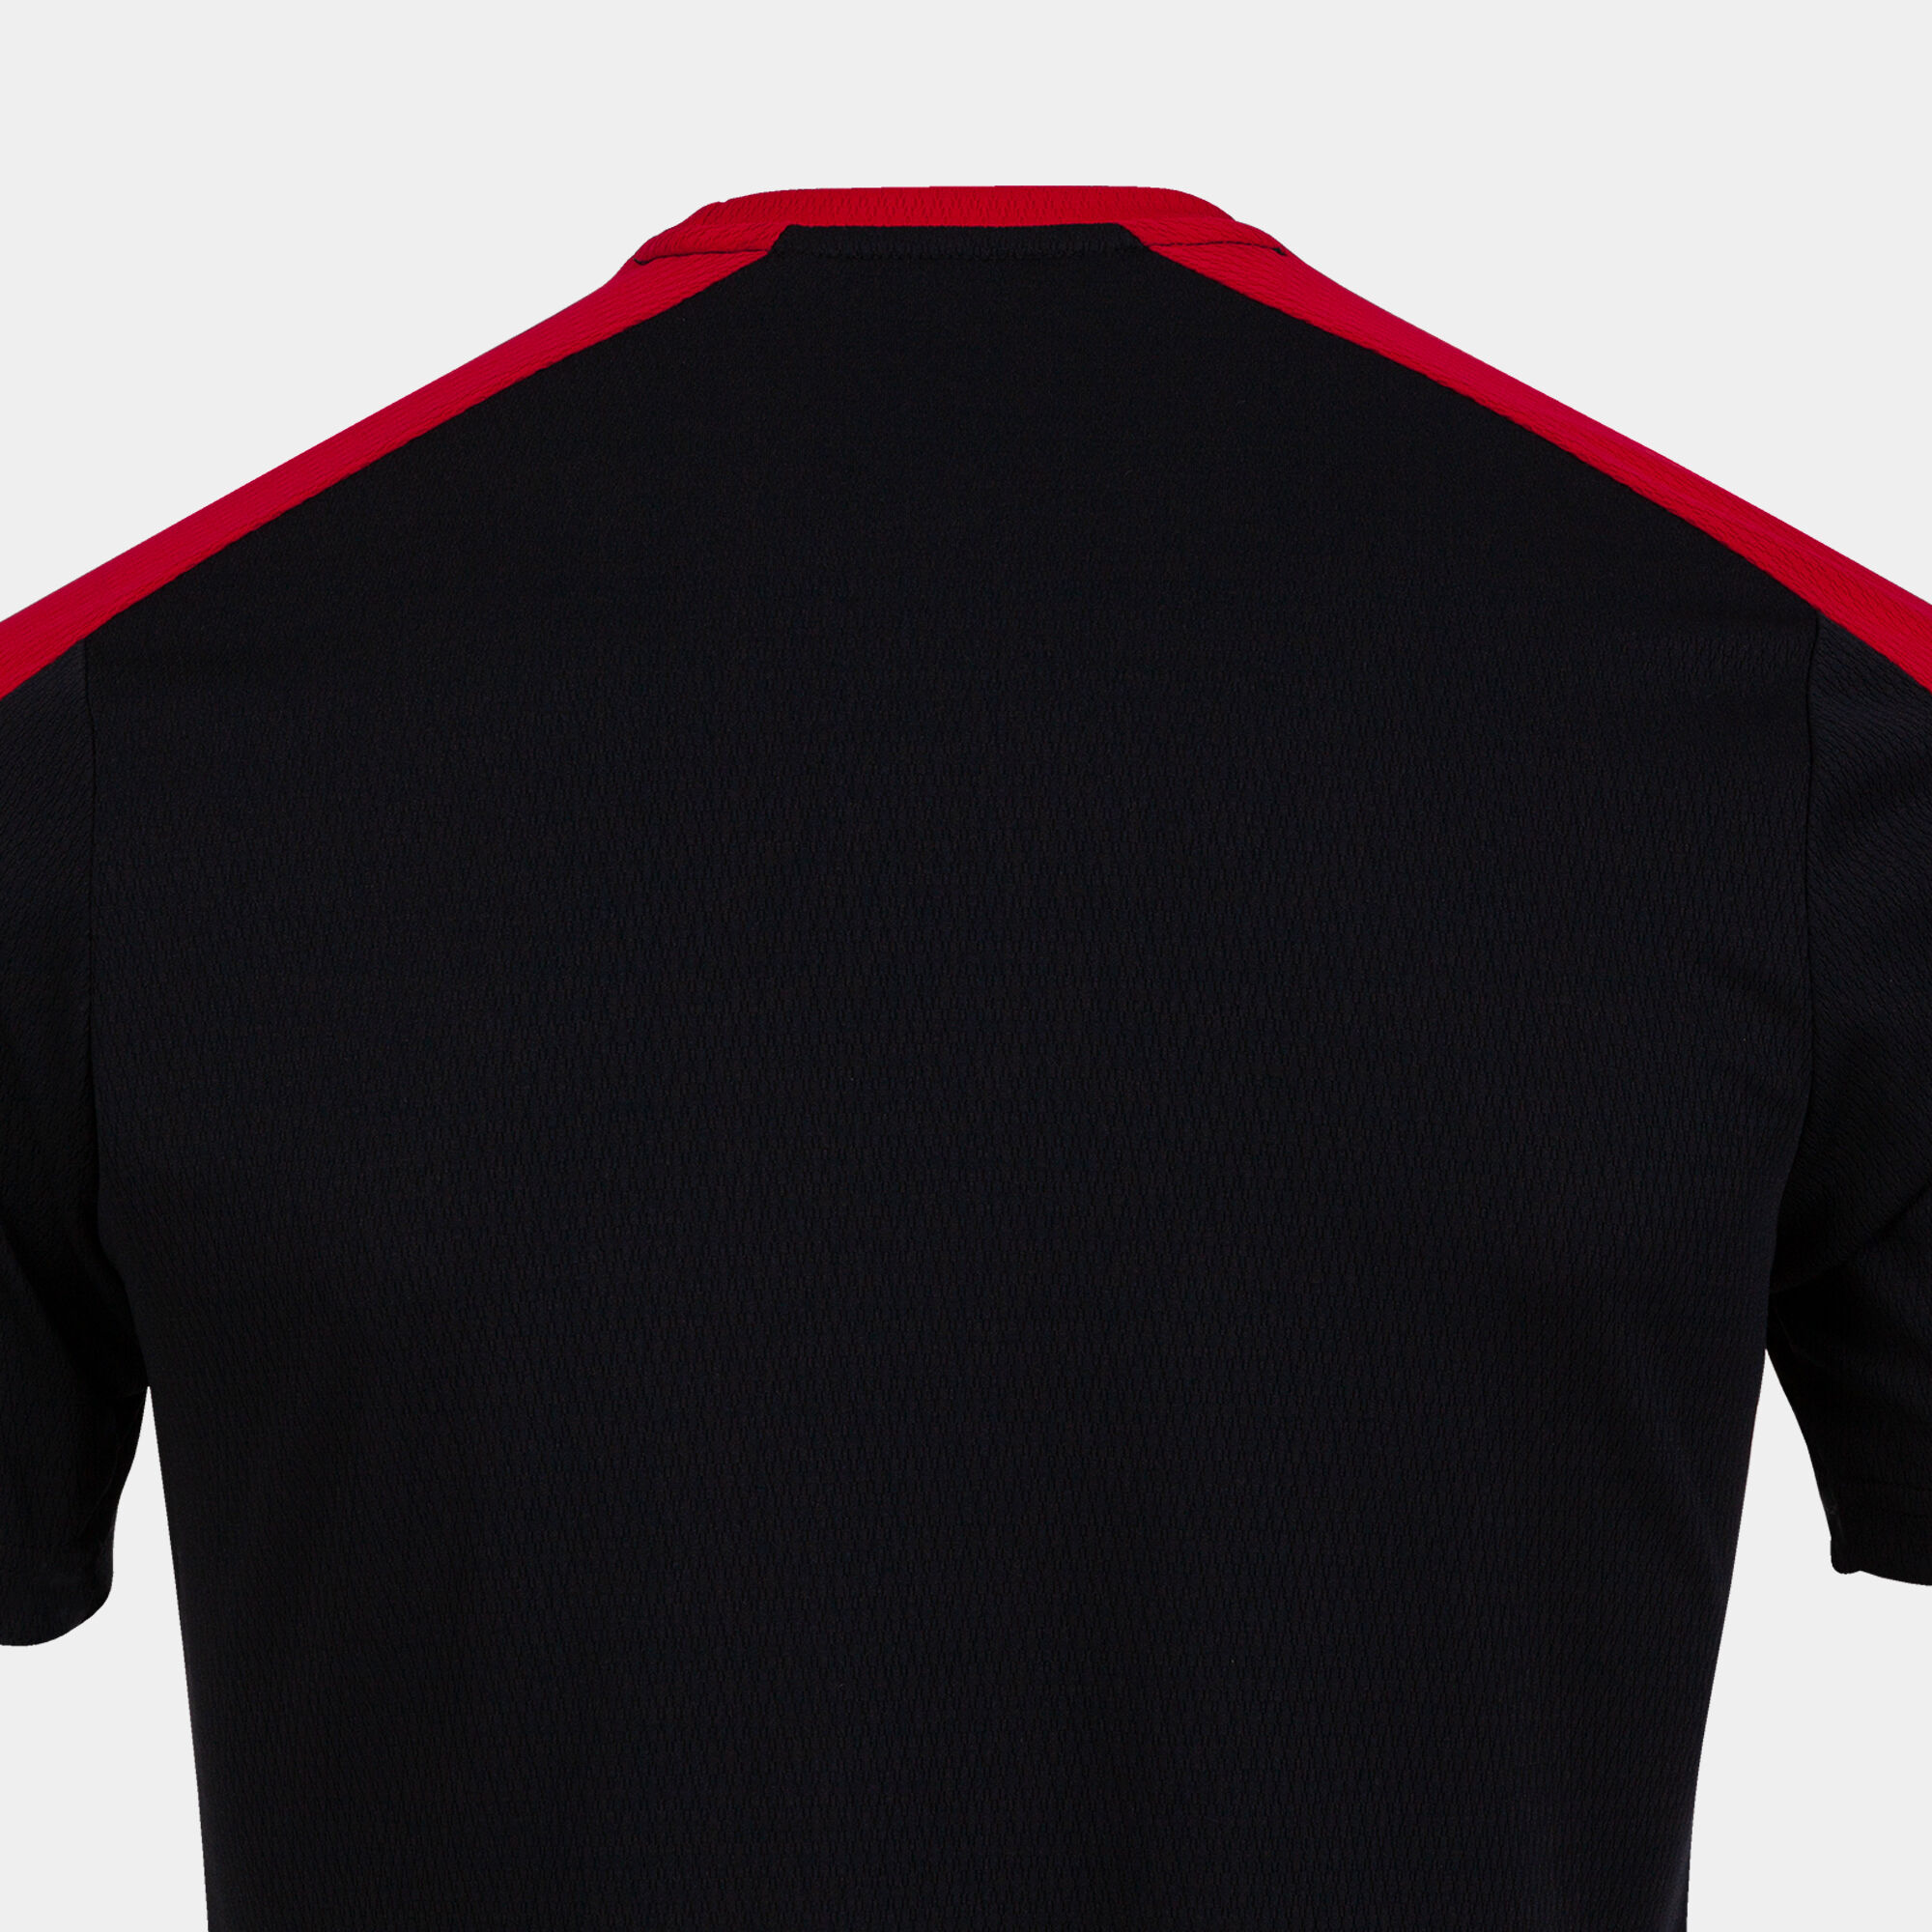 Joma Eco Championship Camiseta de Tenis Hombre Black/Anthracite